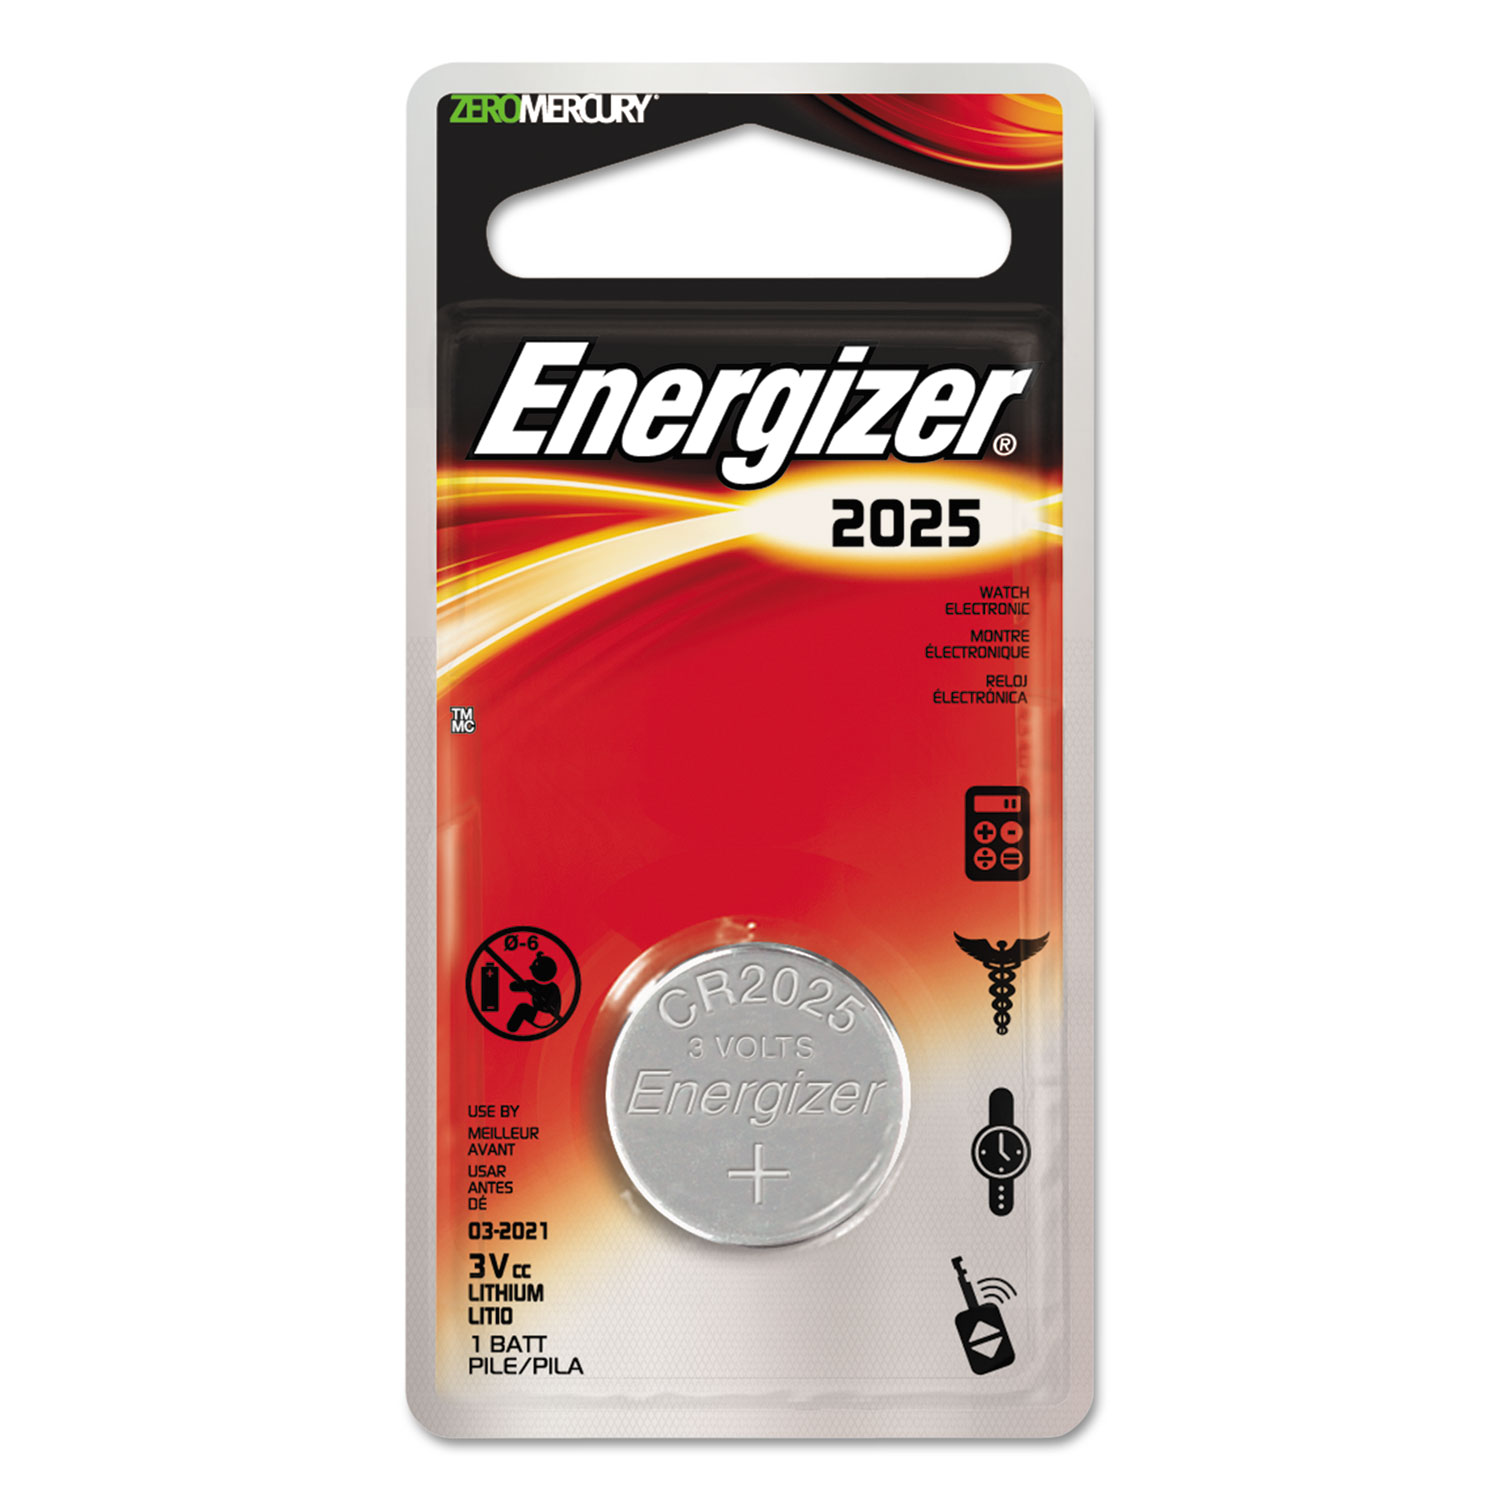 Energizer CR2025 lithium battery, 3,0V @